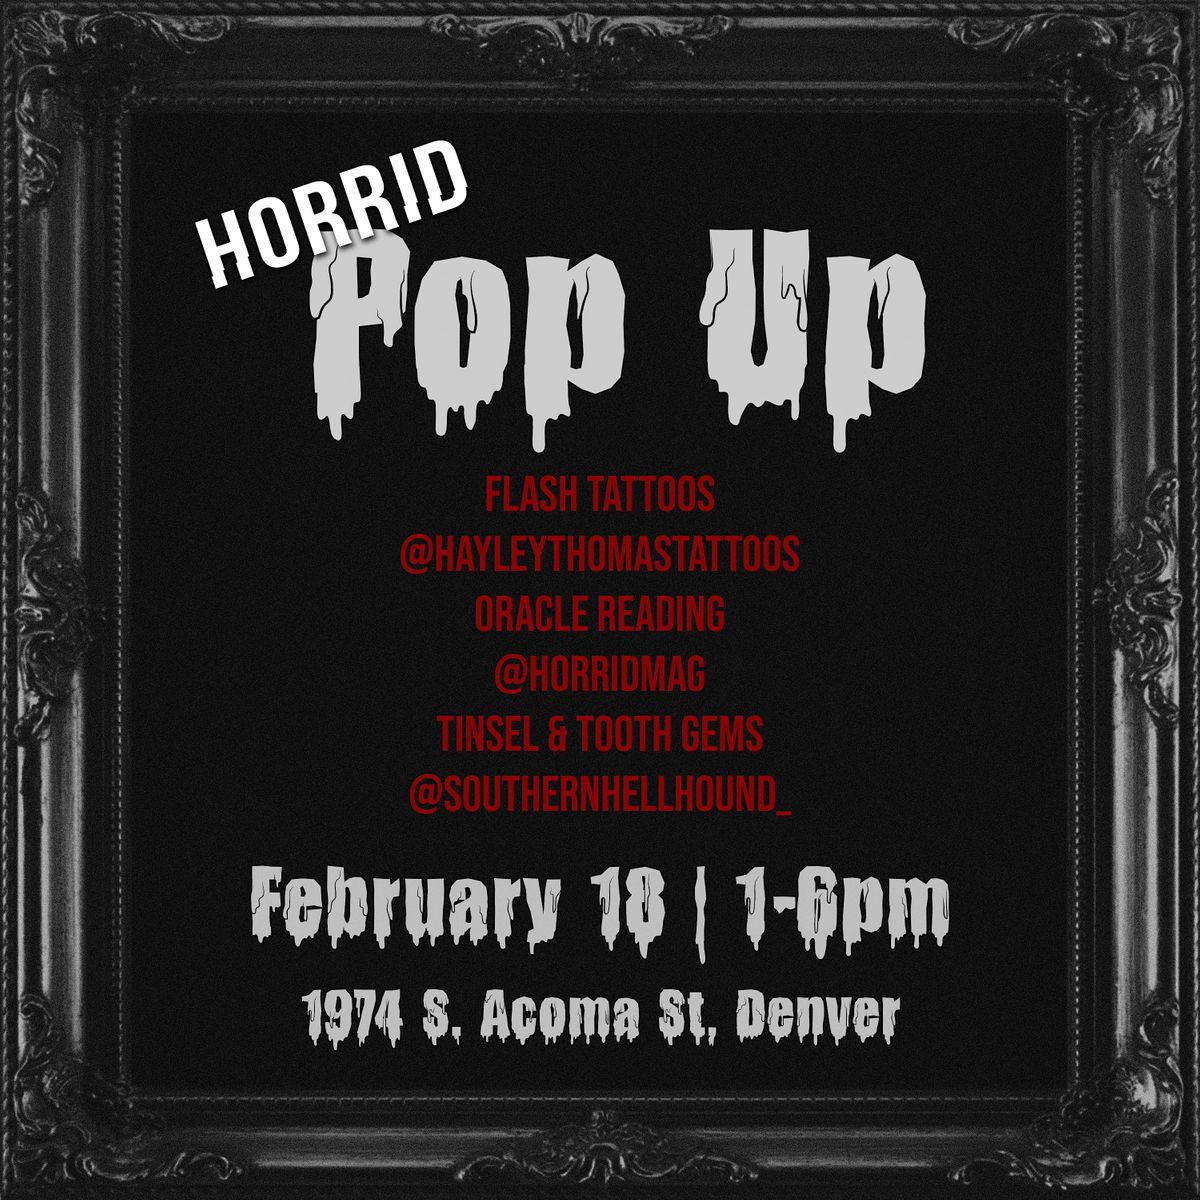 Pop Up at HORRID